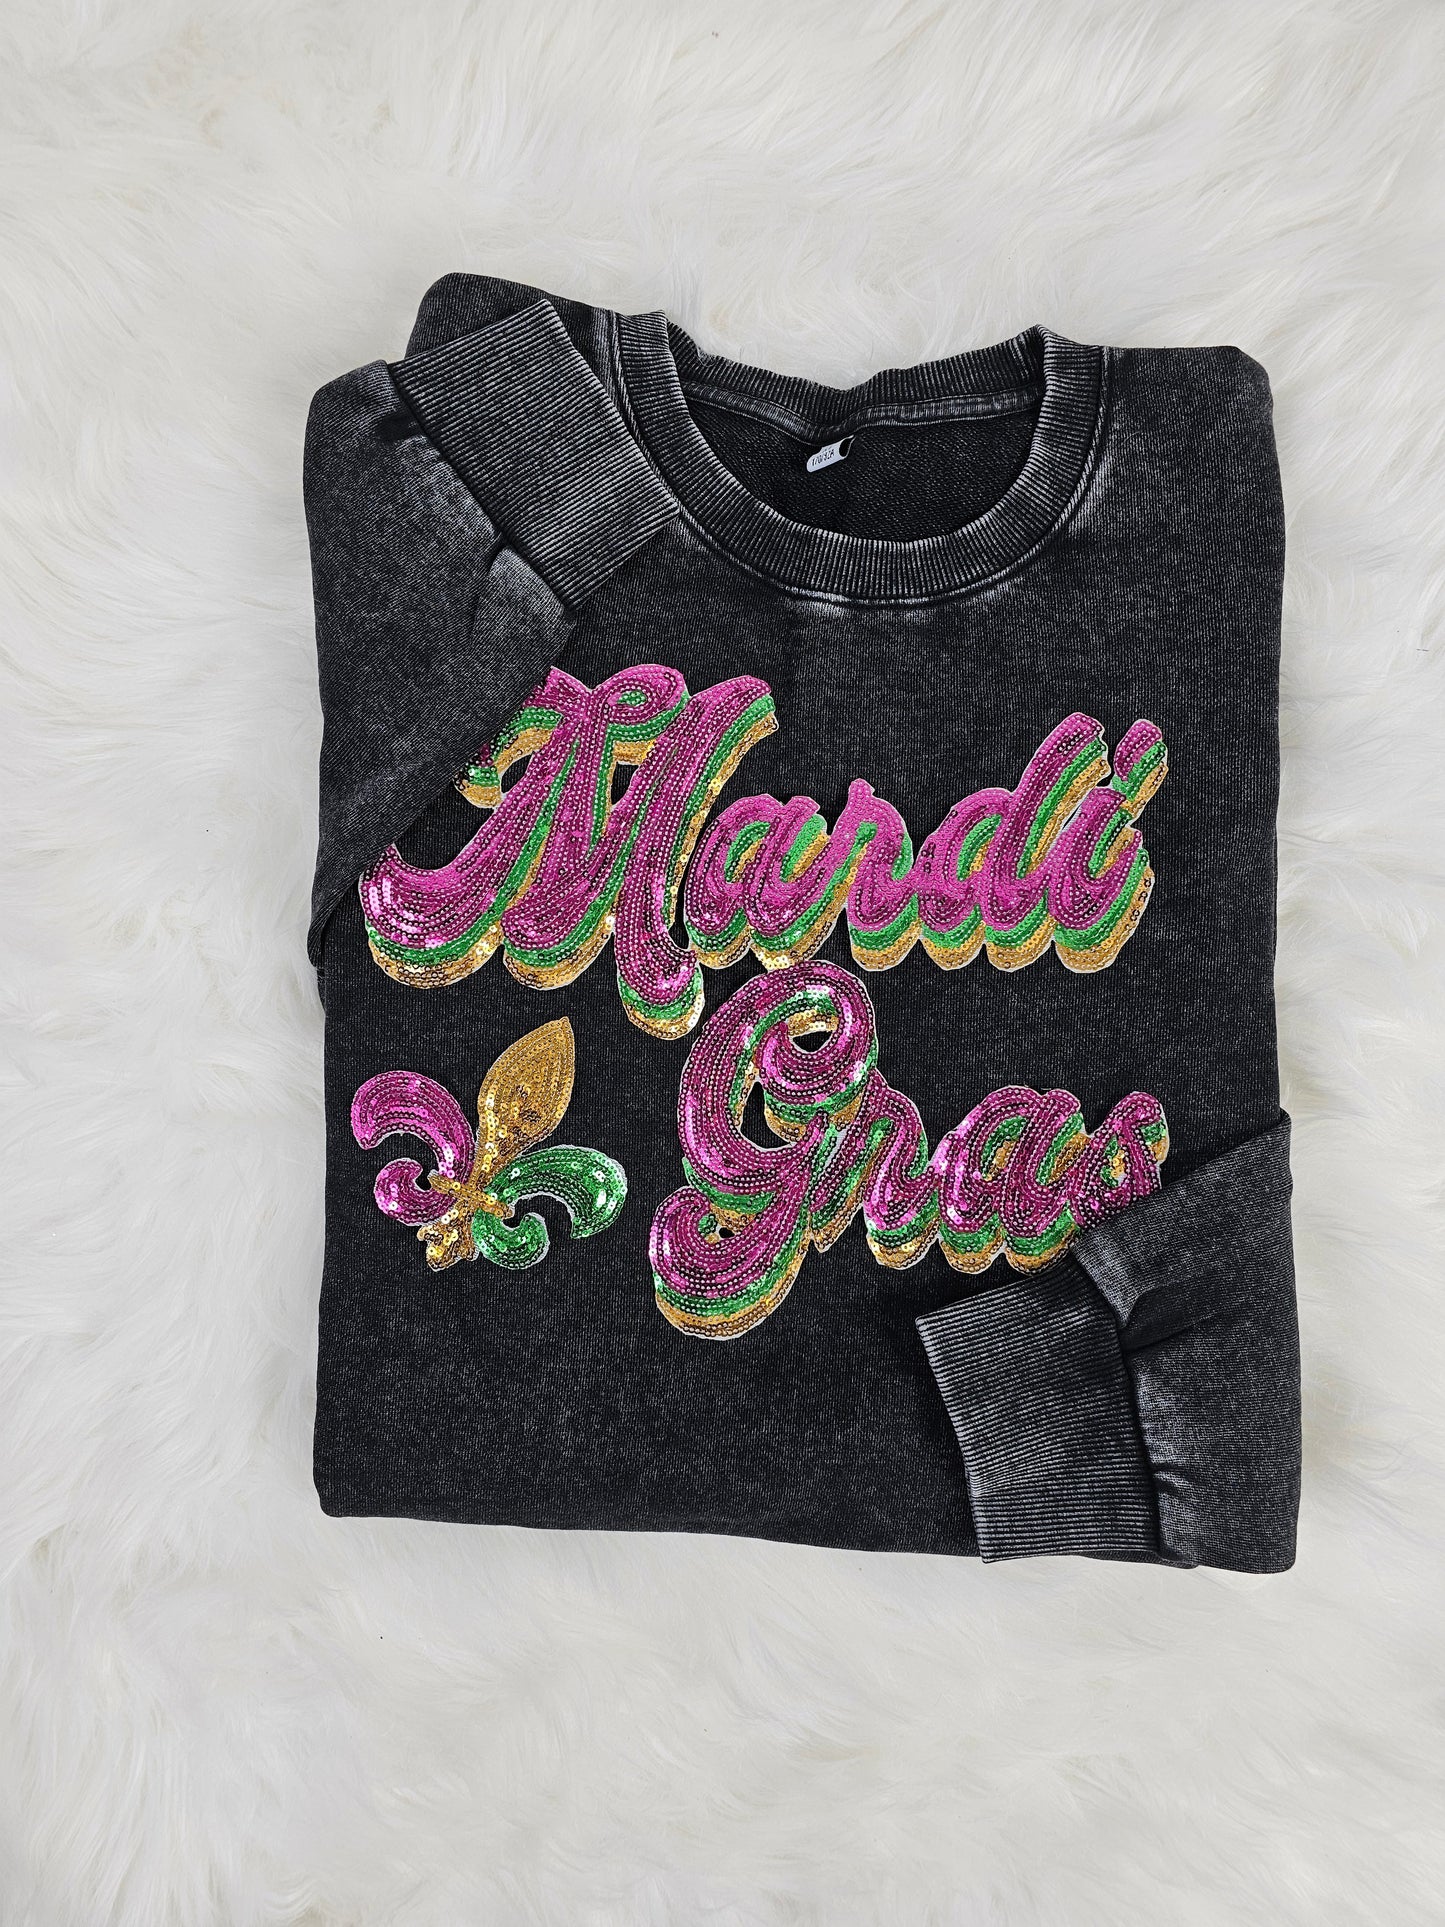 Mardi Gras With Fleur-De-Lis Sequin Acid Wash Black Crew by Pretty Preppy Co.